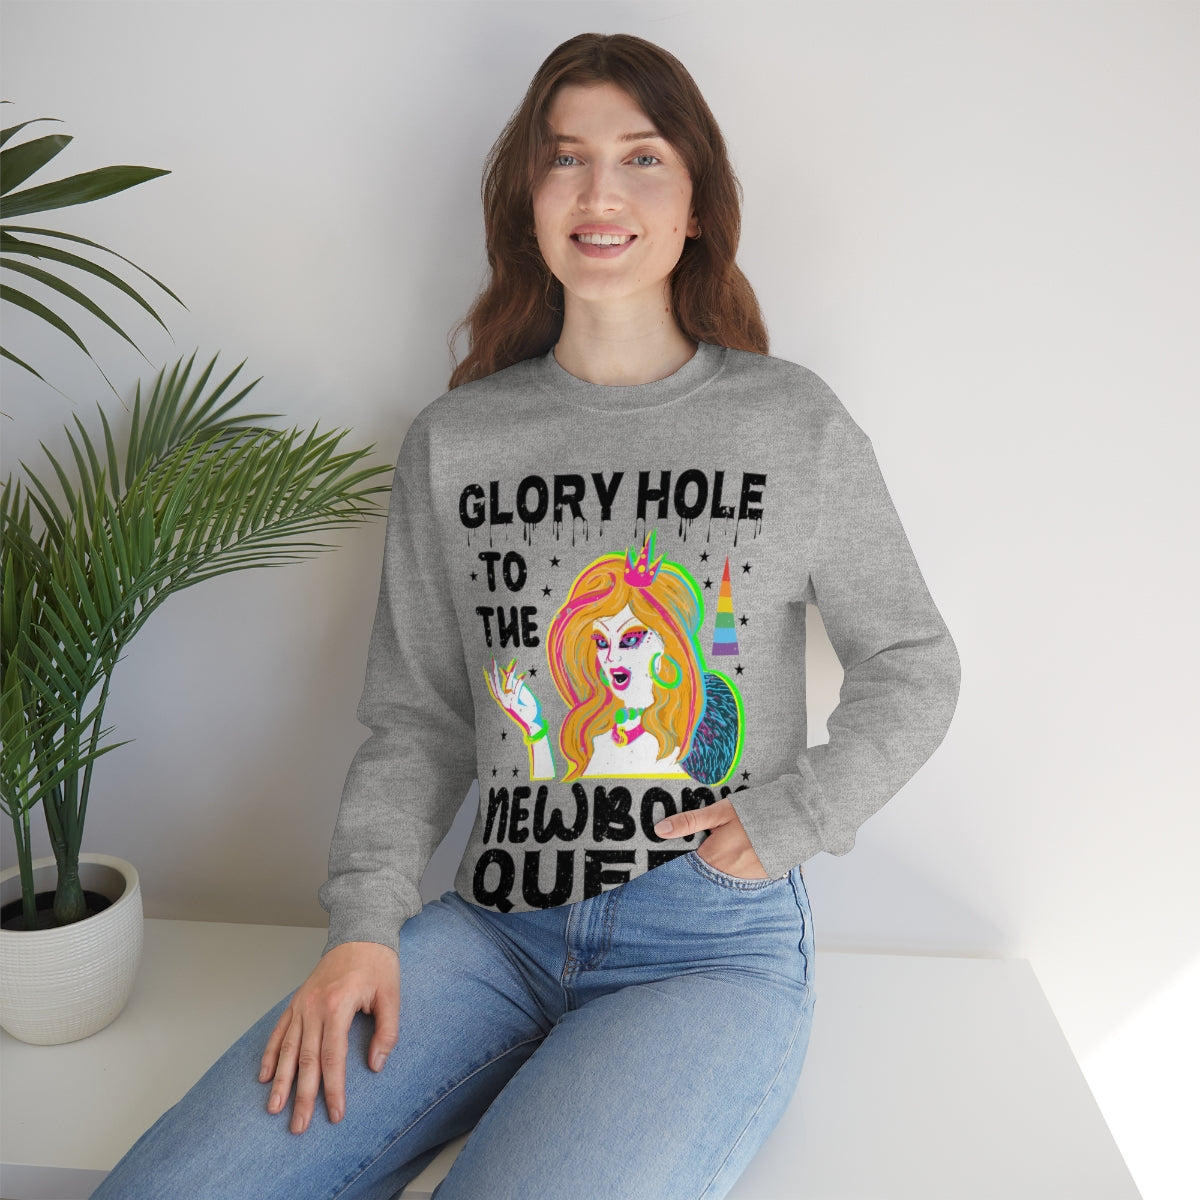 Unisex Christmas LGBTQ Heavy Blend Crewneck Sweatshirt - Glory Hole To The Newborn Queen Printify